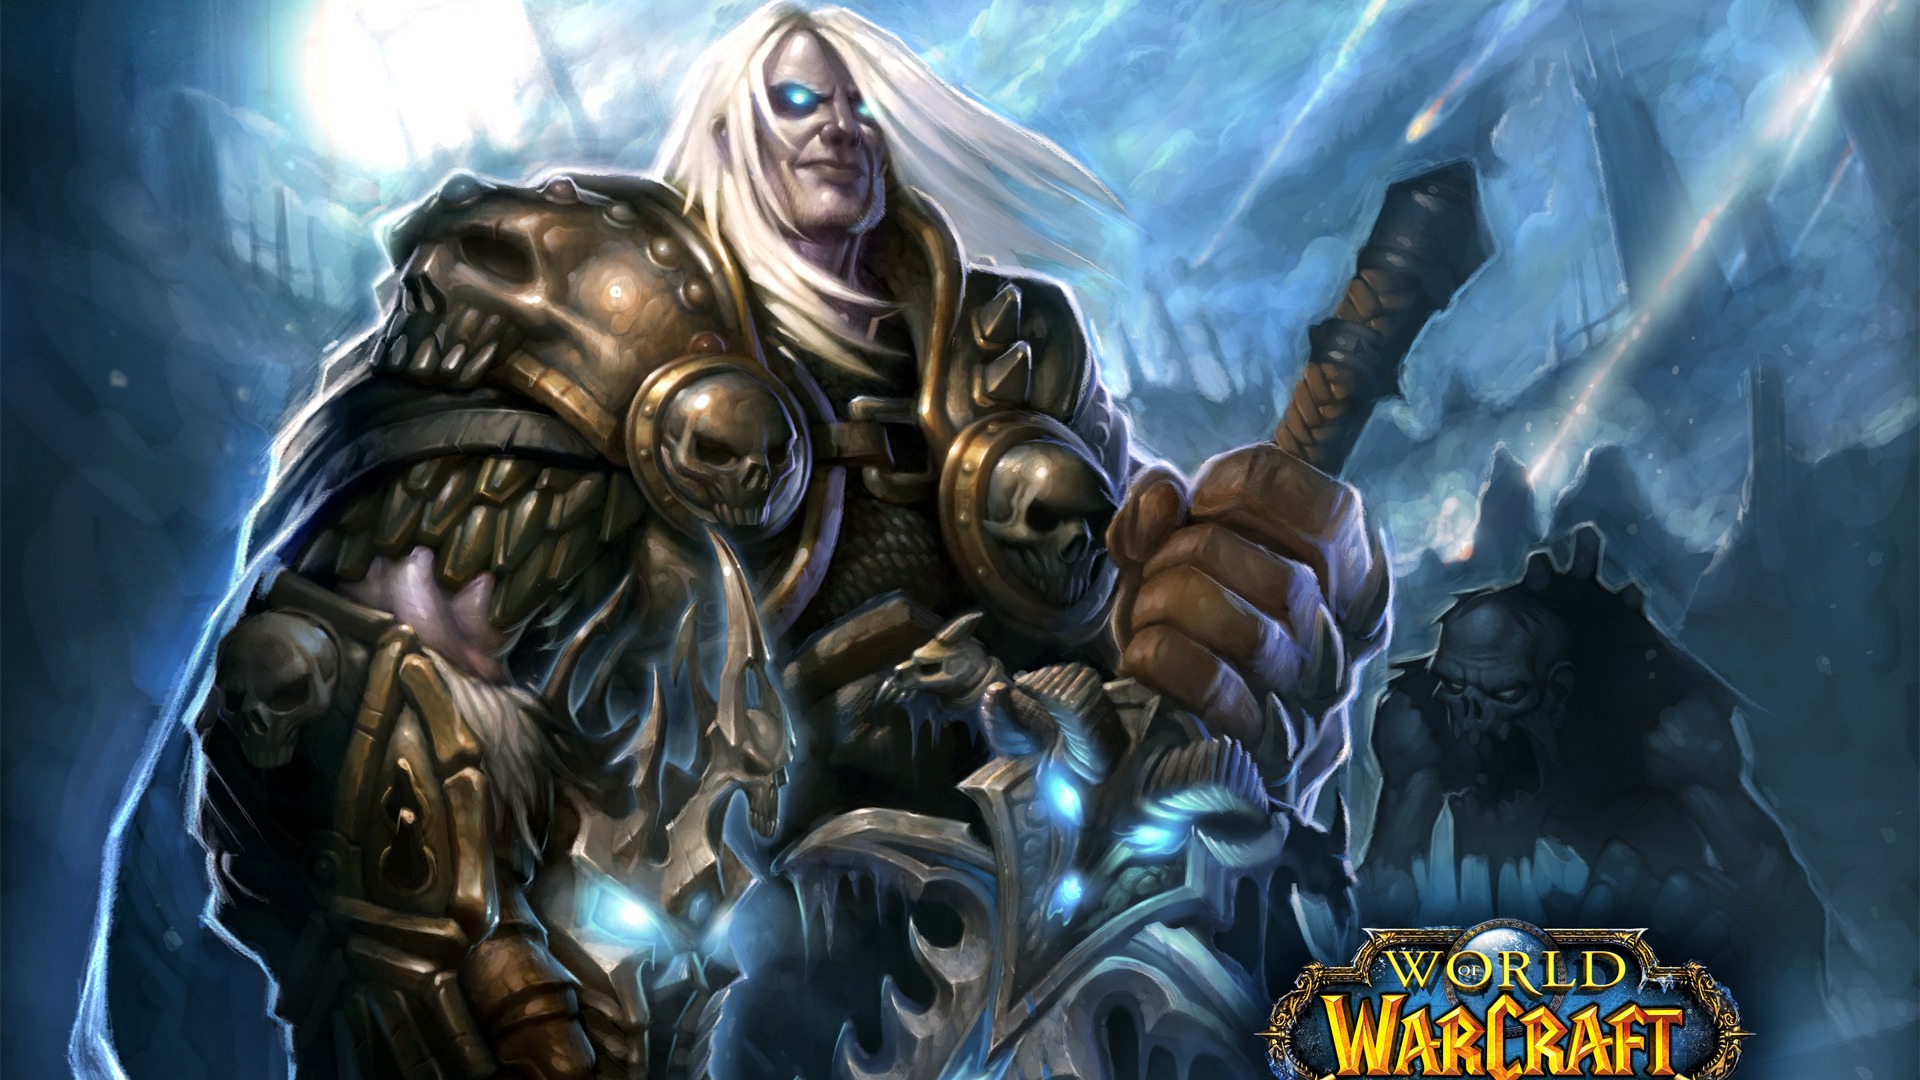 World of Warcraft 魔兽世界高清壁纸(二)1 - 1920x1080